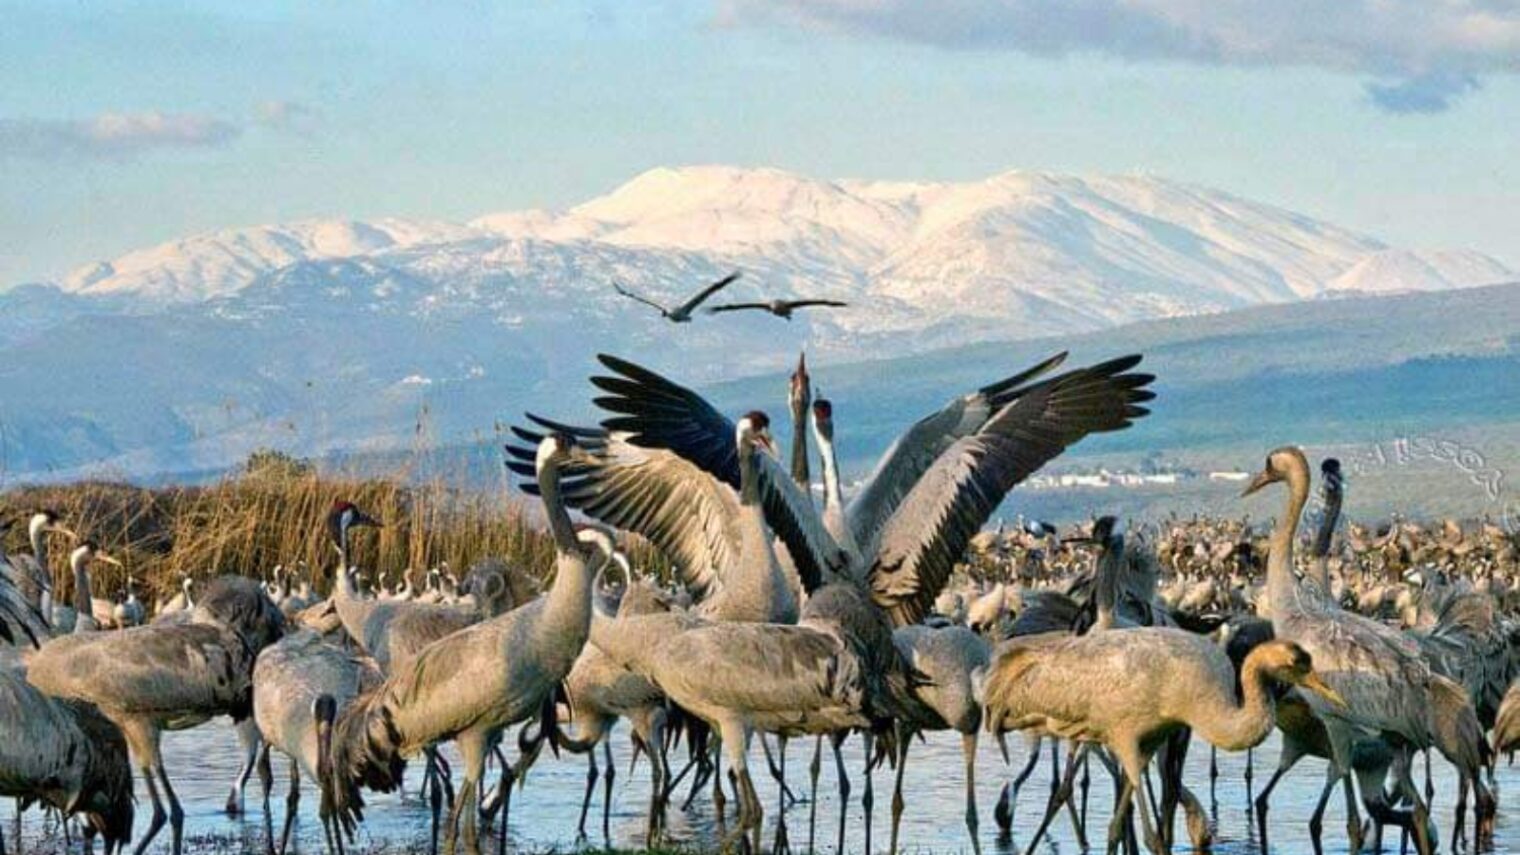 Storks flock to Hula Lake in the Upper Galilee. Photo by Yossi Eshbol/KKL